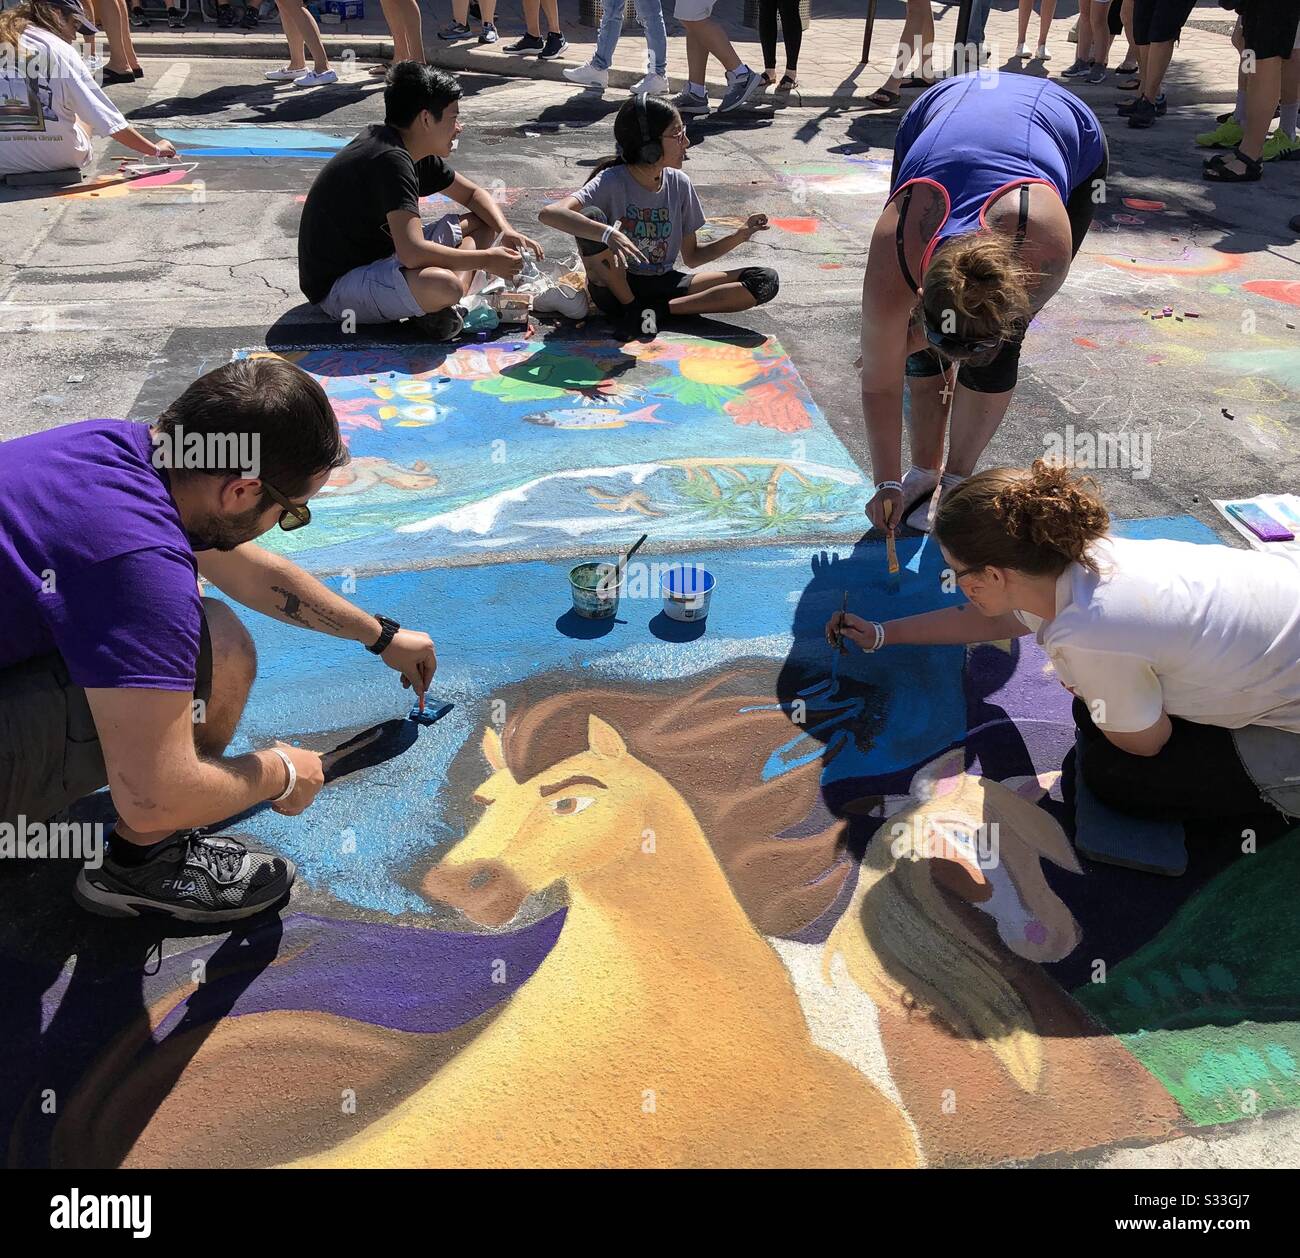 Artists create sidewalk murals at the Street Painting festival in Lake Worth Beach, FL. February 2020. Stock Photo